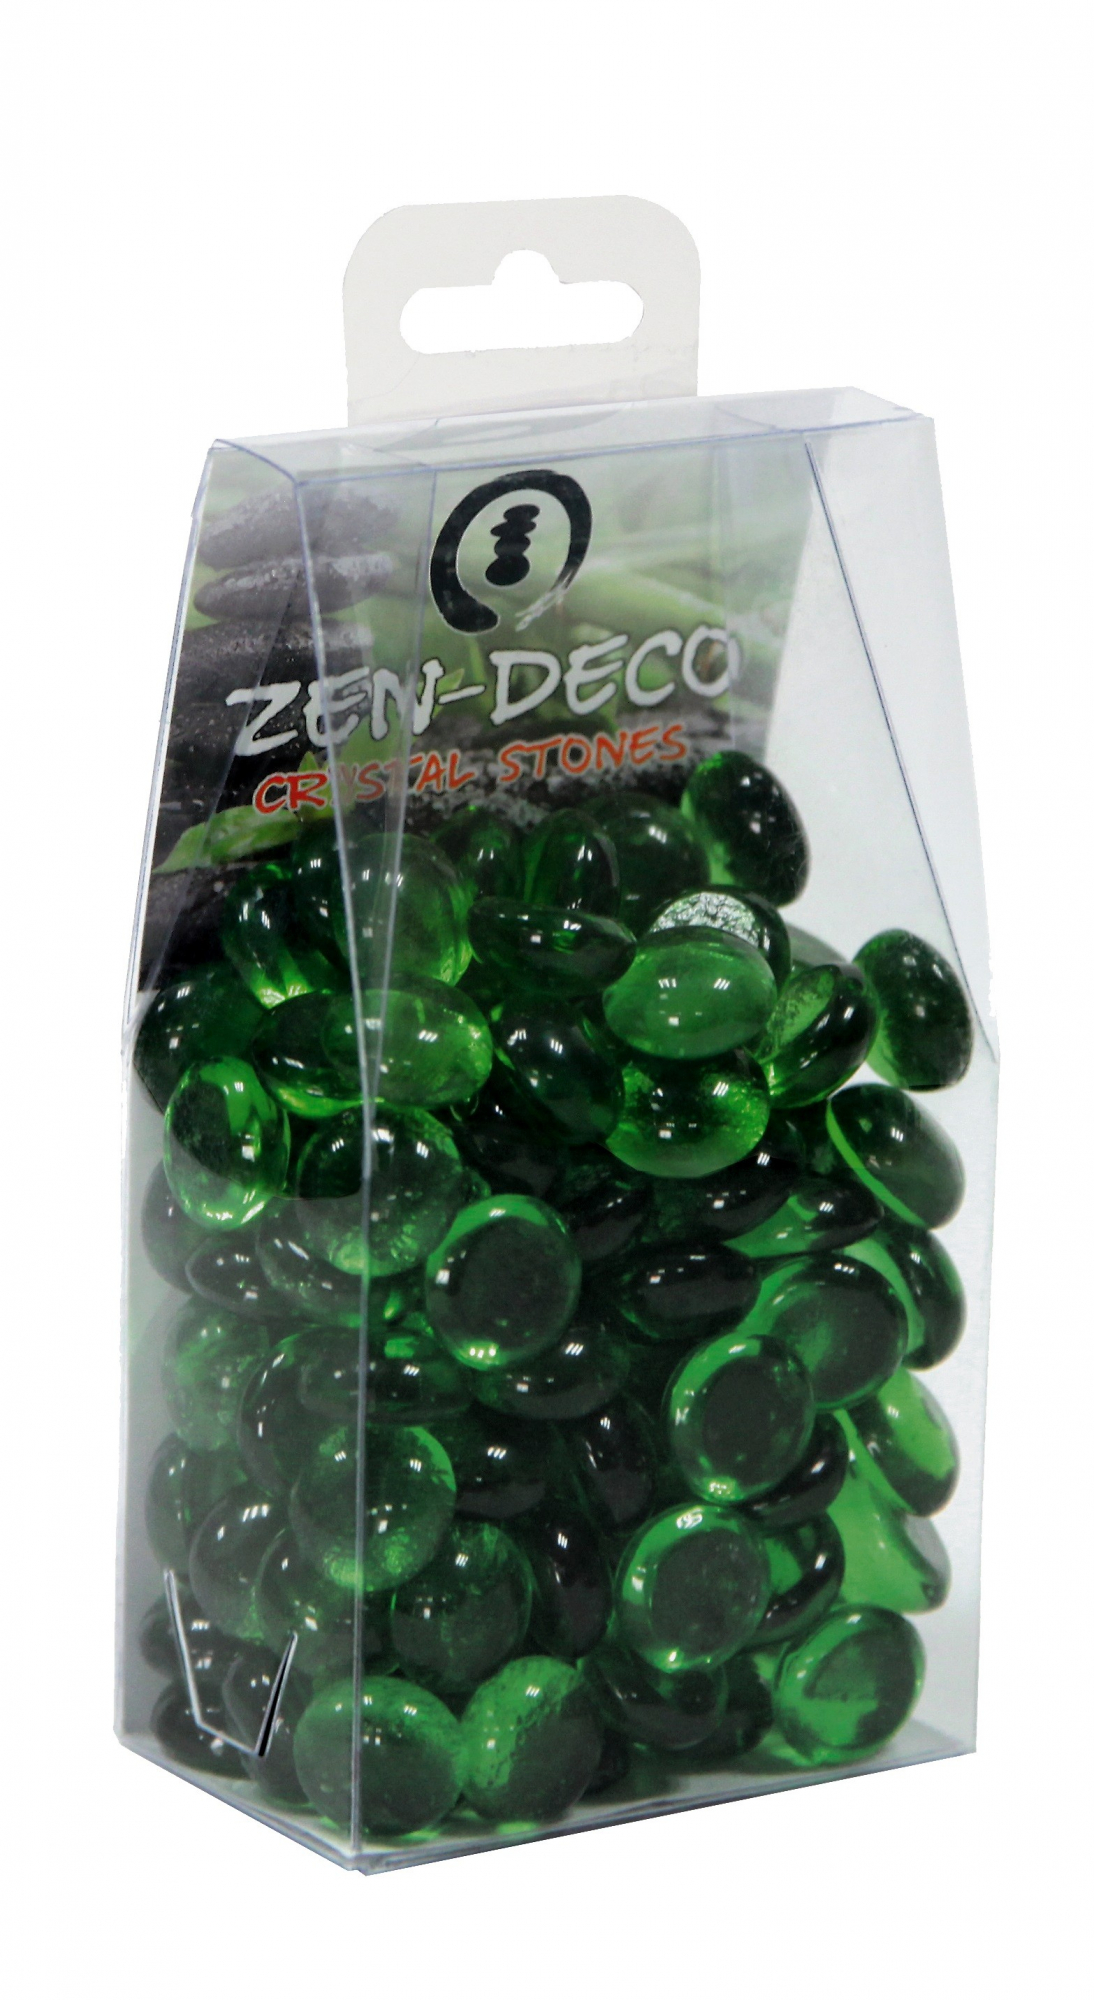 SuperFish Zen Deco - Crystal Stones seixos vidro